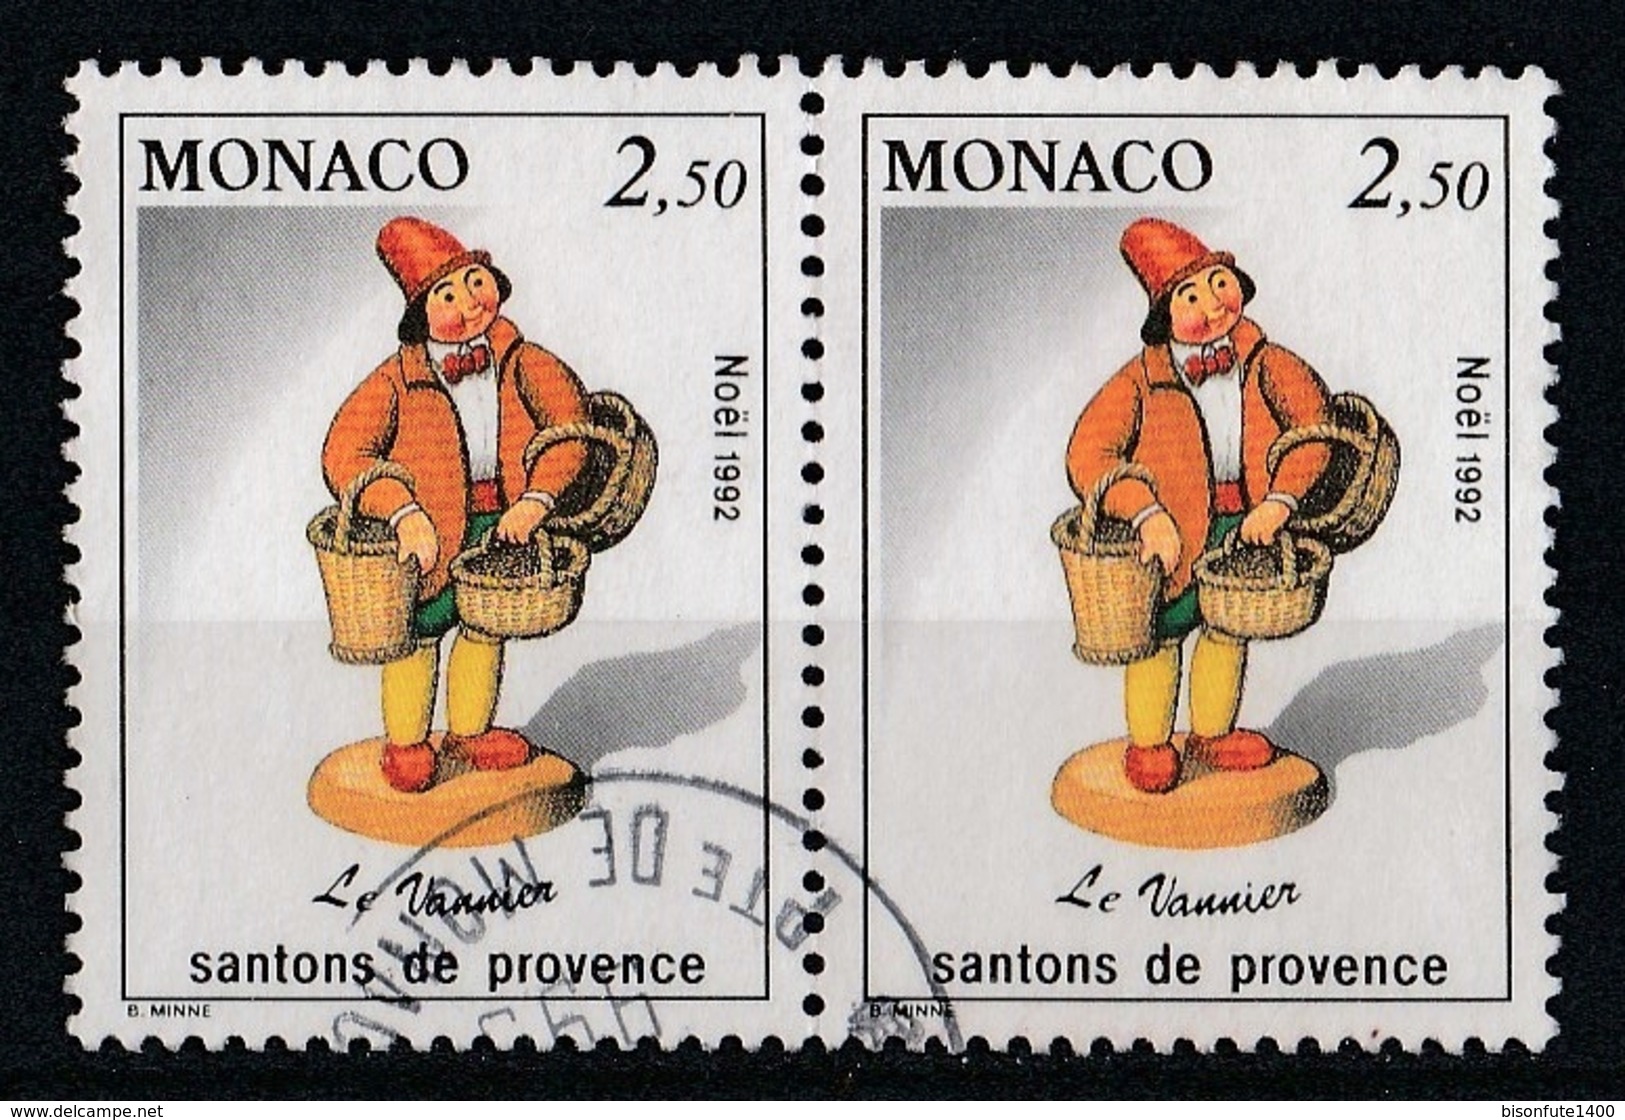 Monaco 1992 : Timbres Yvert & Tellier N° 1846 En Paire. - Usados